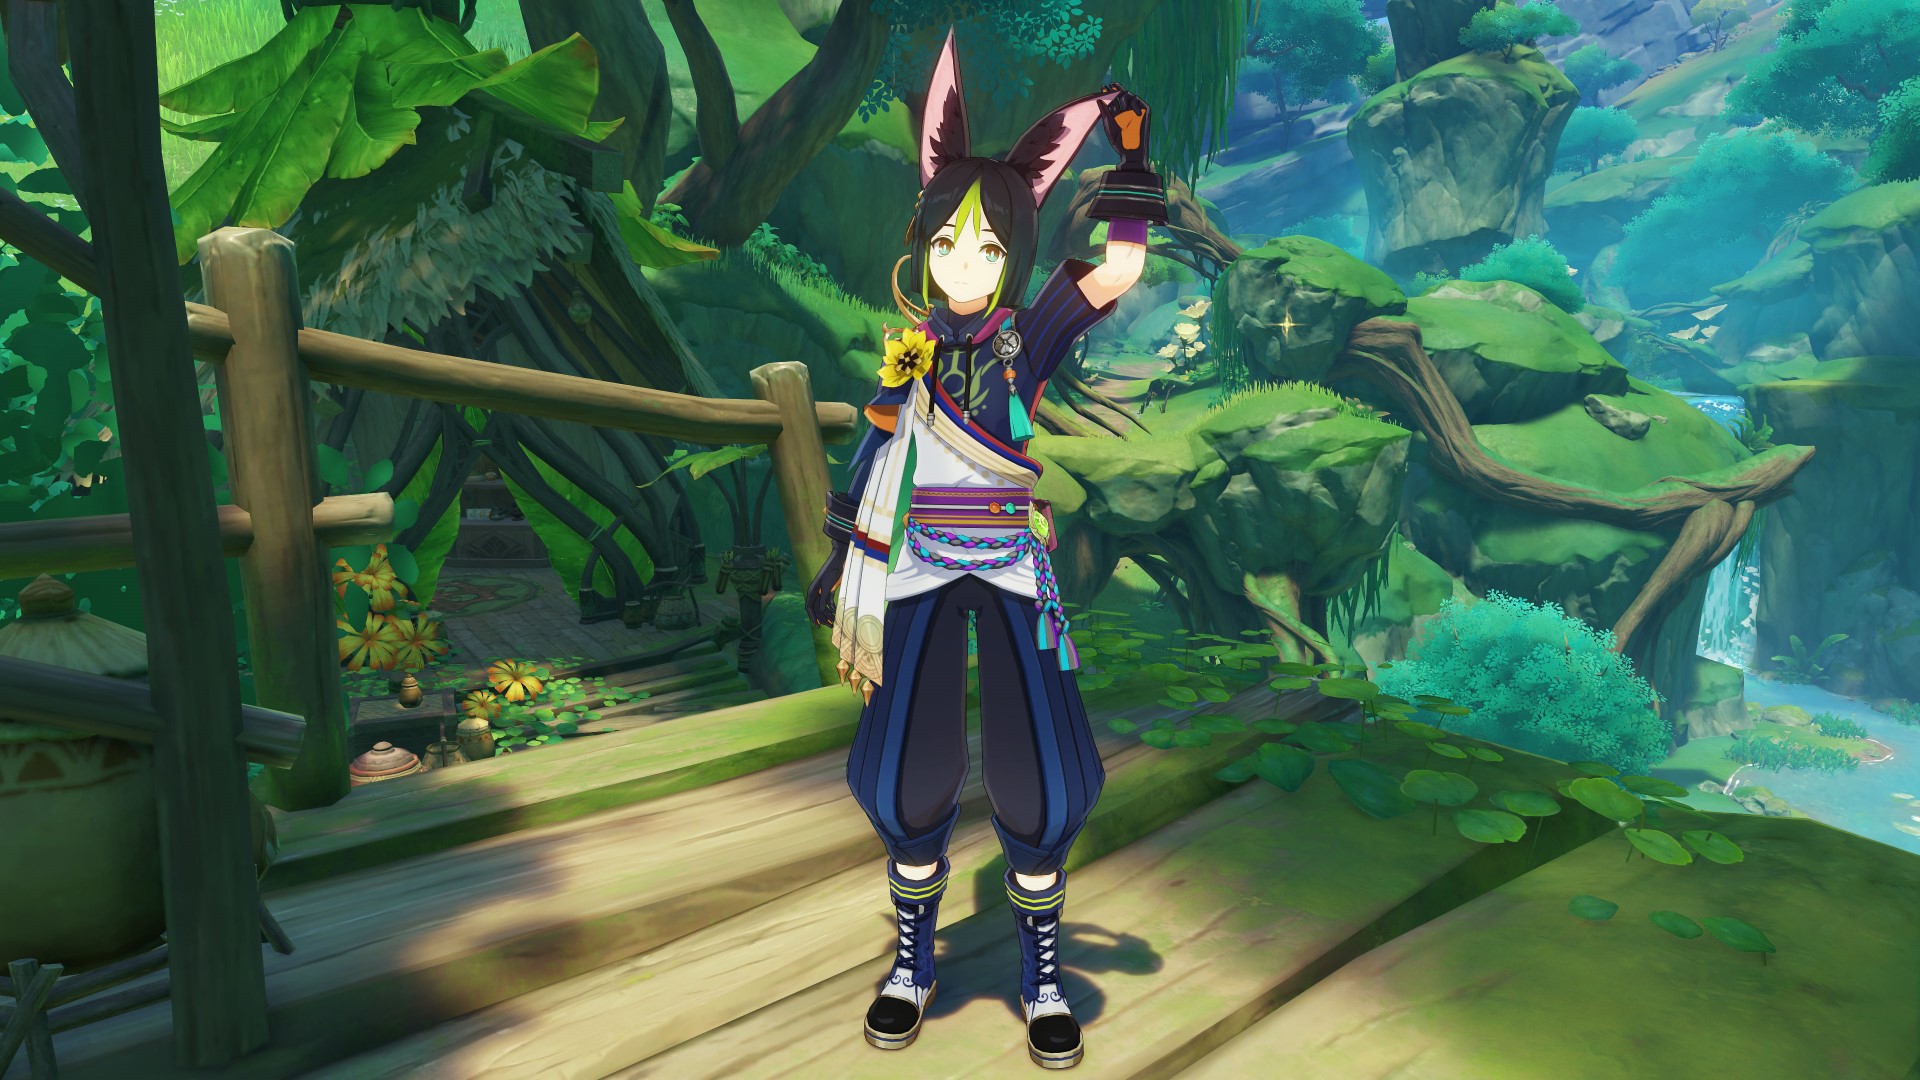 Genshin Impact 3.0 character Tighnari in Avidya forest